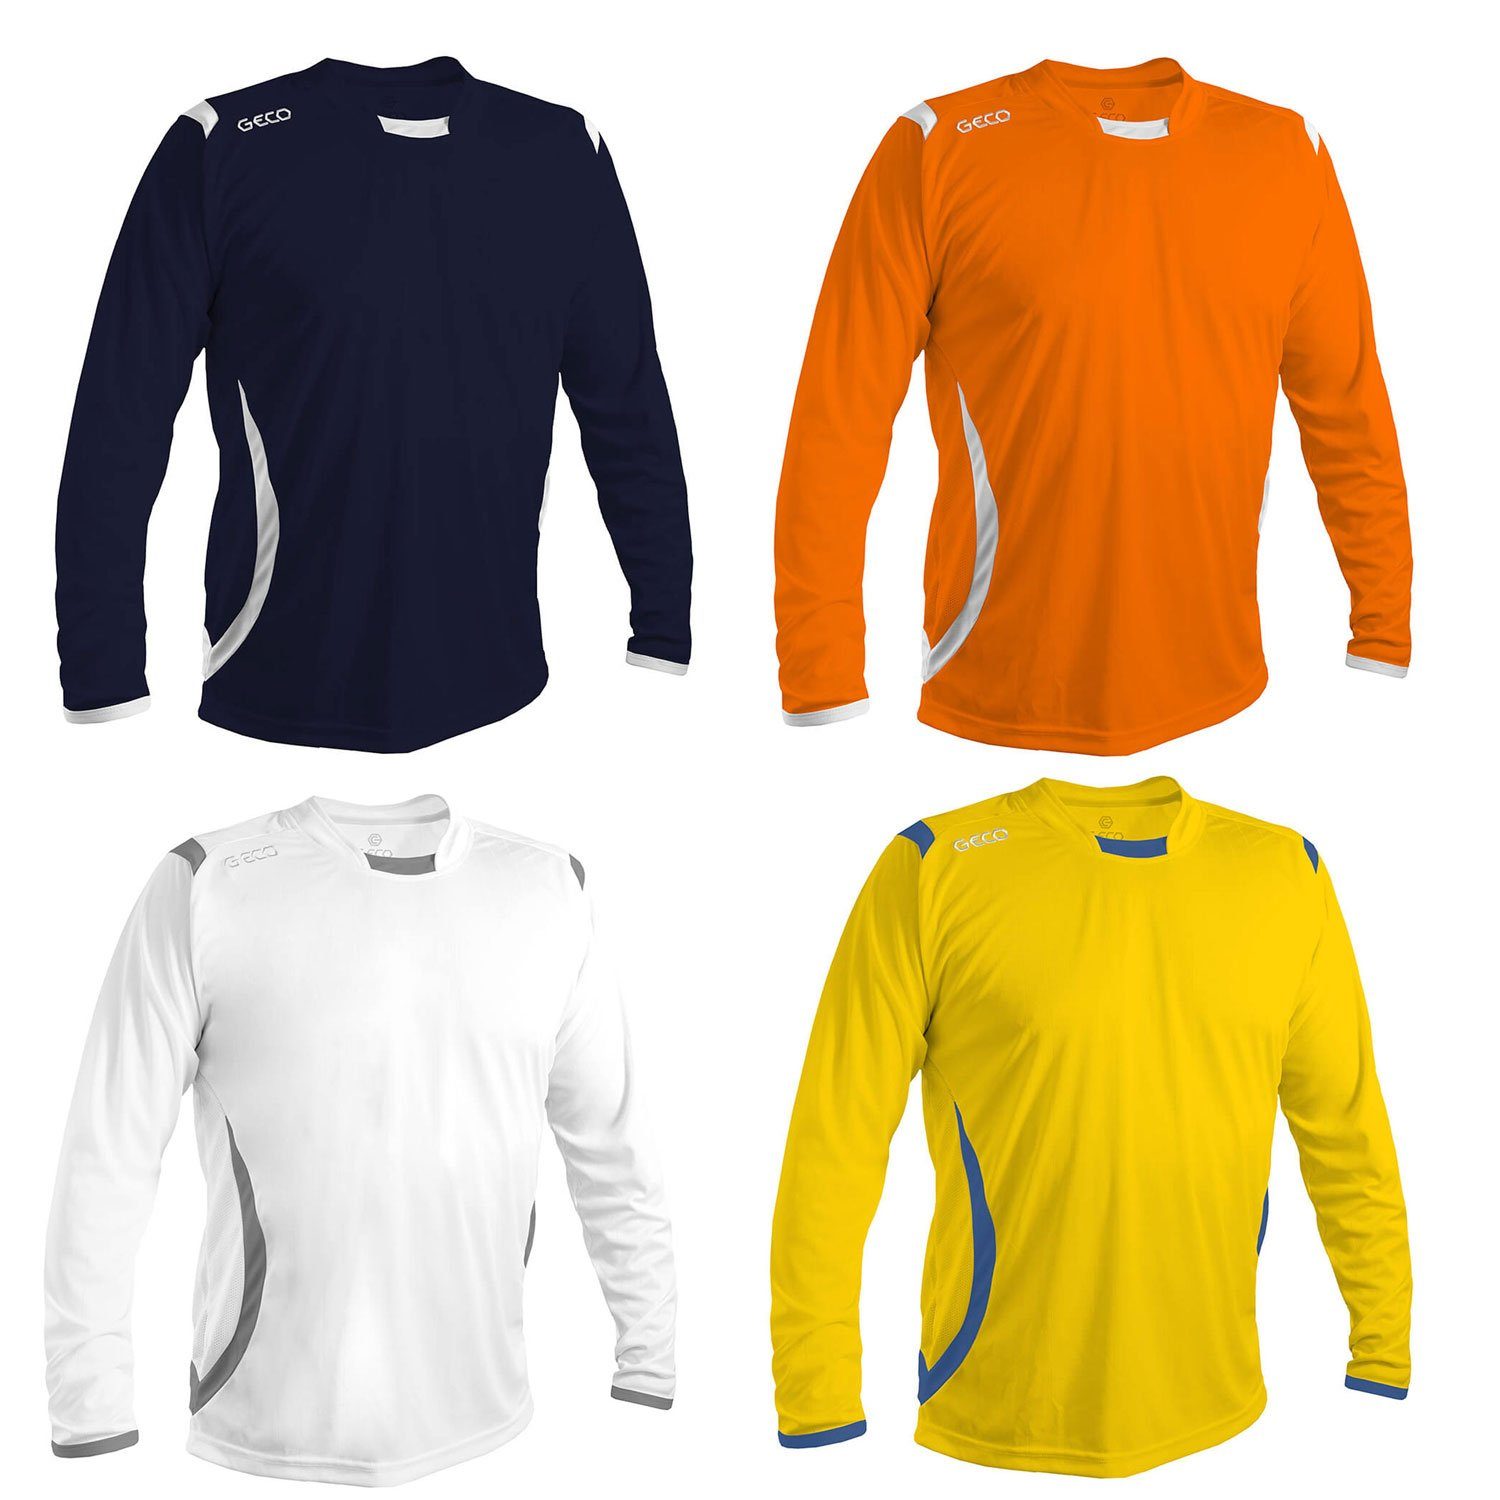 Geco Sportswear zweifarbig Trikot langarm weiß/silber Fußball Fußballtrikot Geco Levante